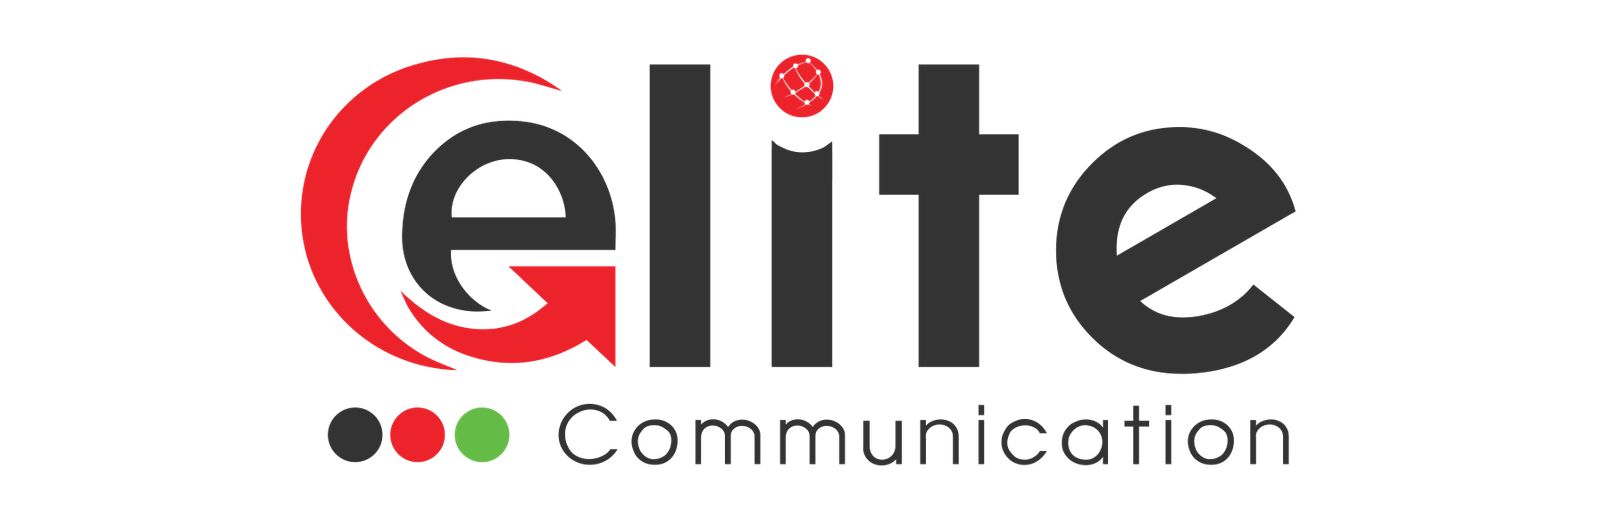 Elite Communication logo